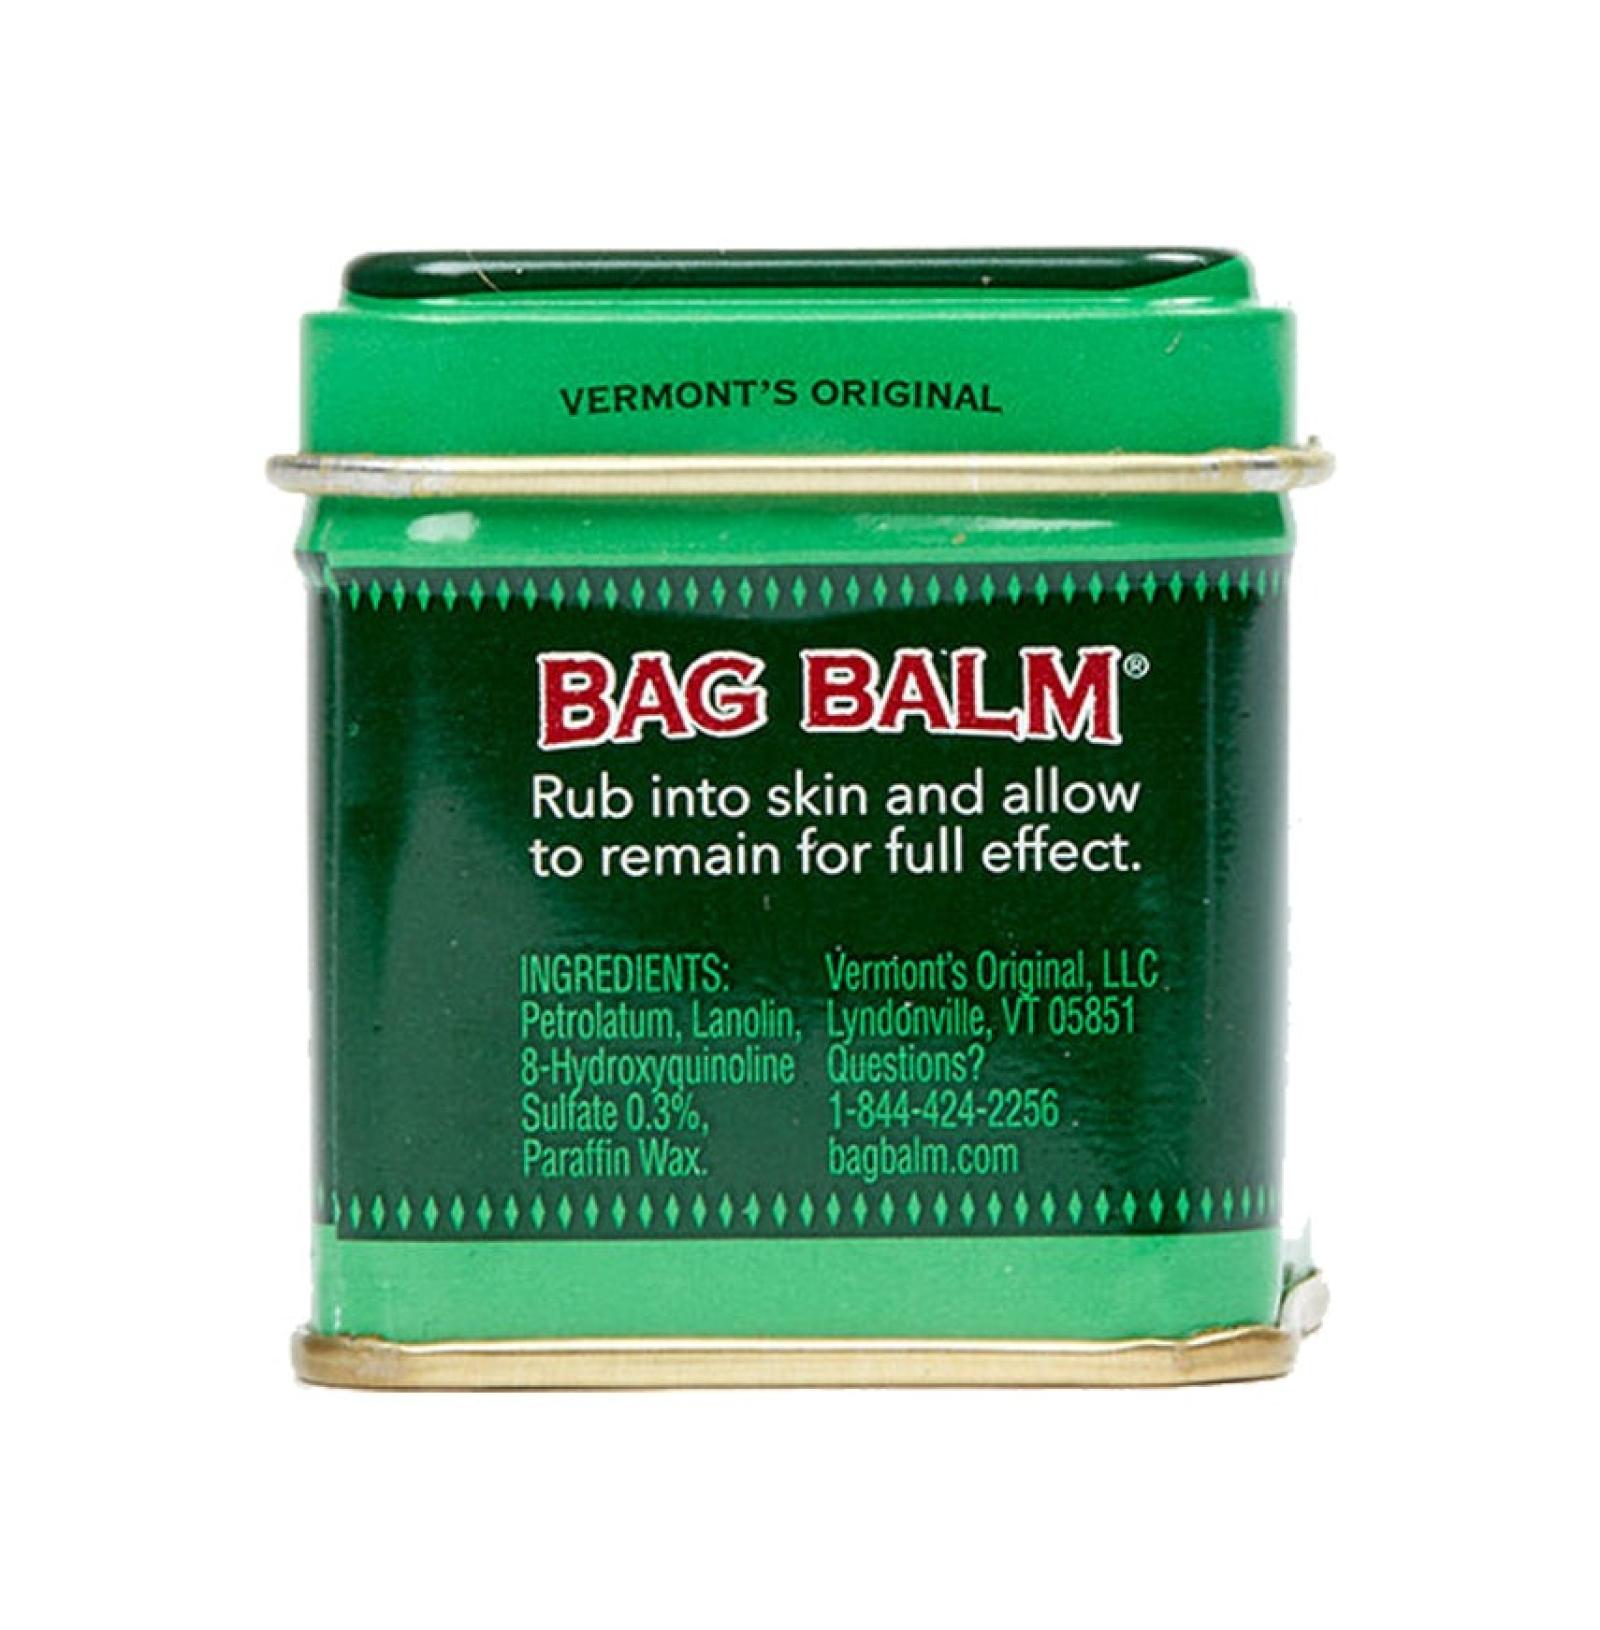 Vermont's Original Bag Balm Skin Moisturizer 8 oz